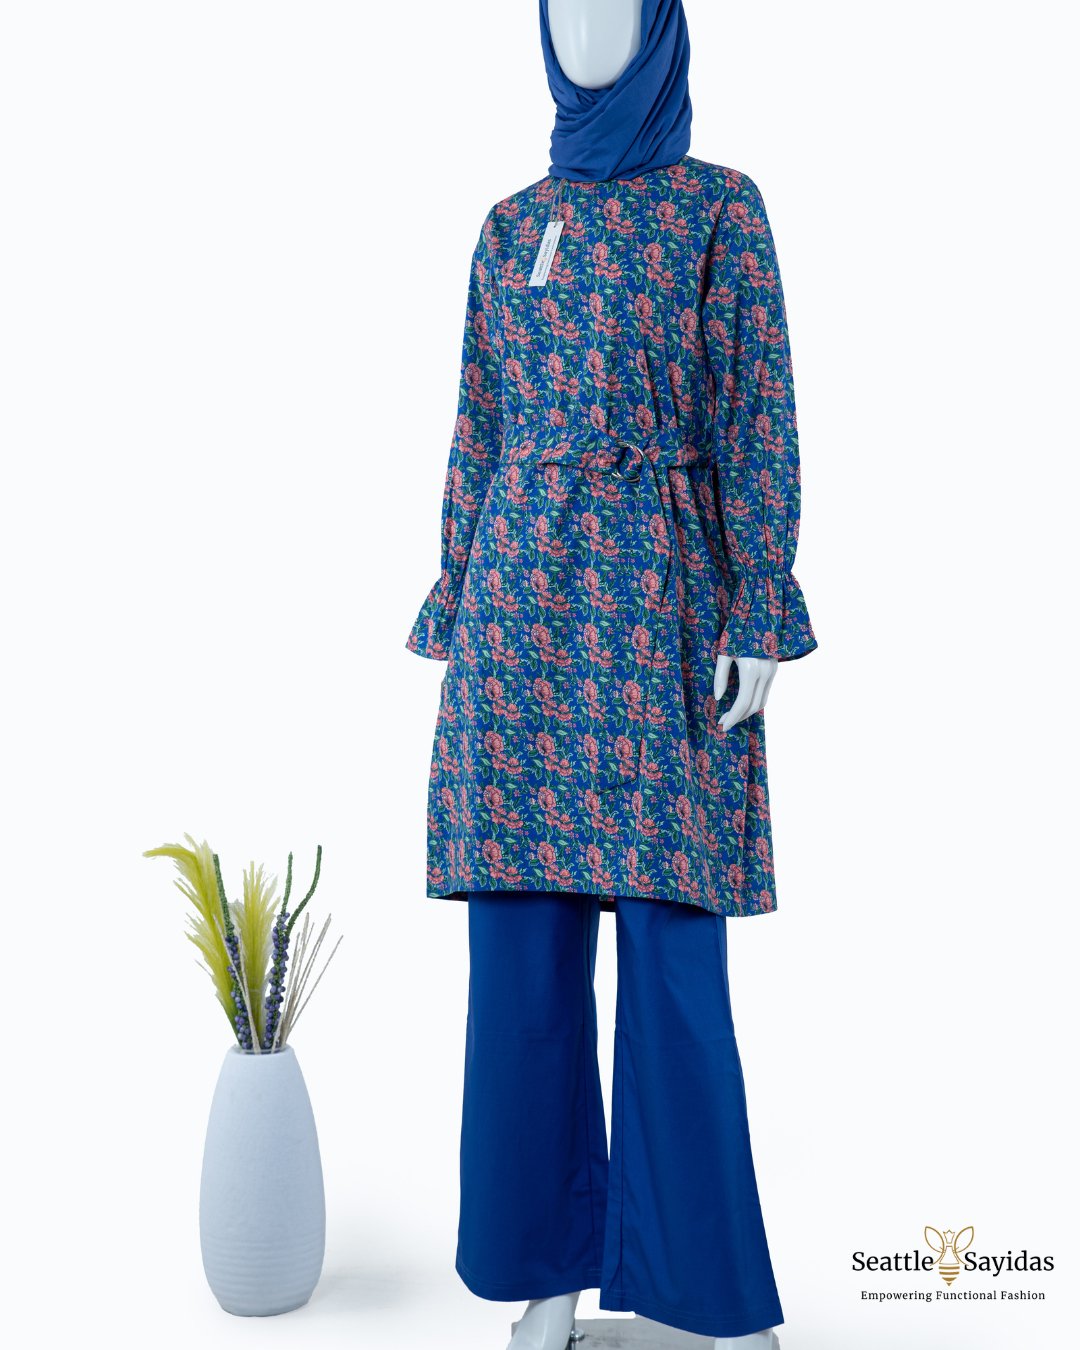 Organic Cotton Clothing Top Poet Tunic Dress In Royal Blue - Seattle Sayidas